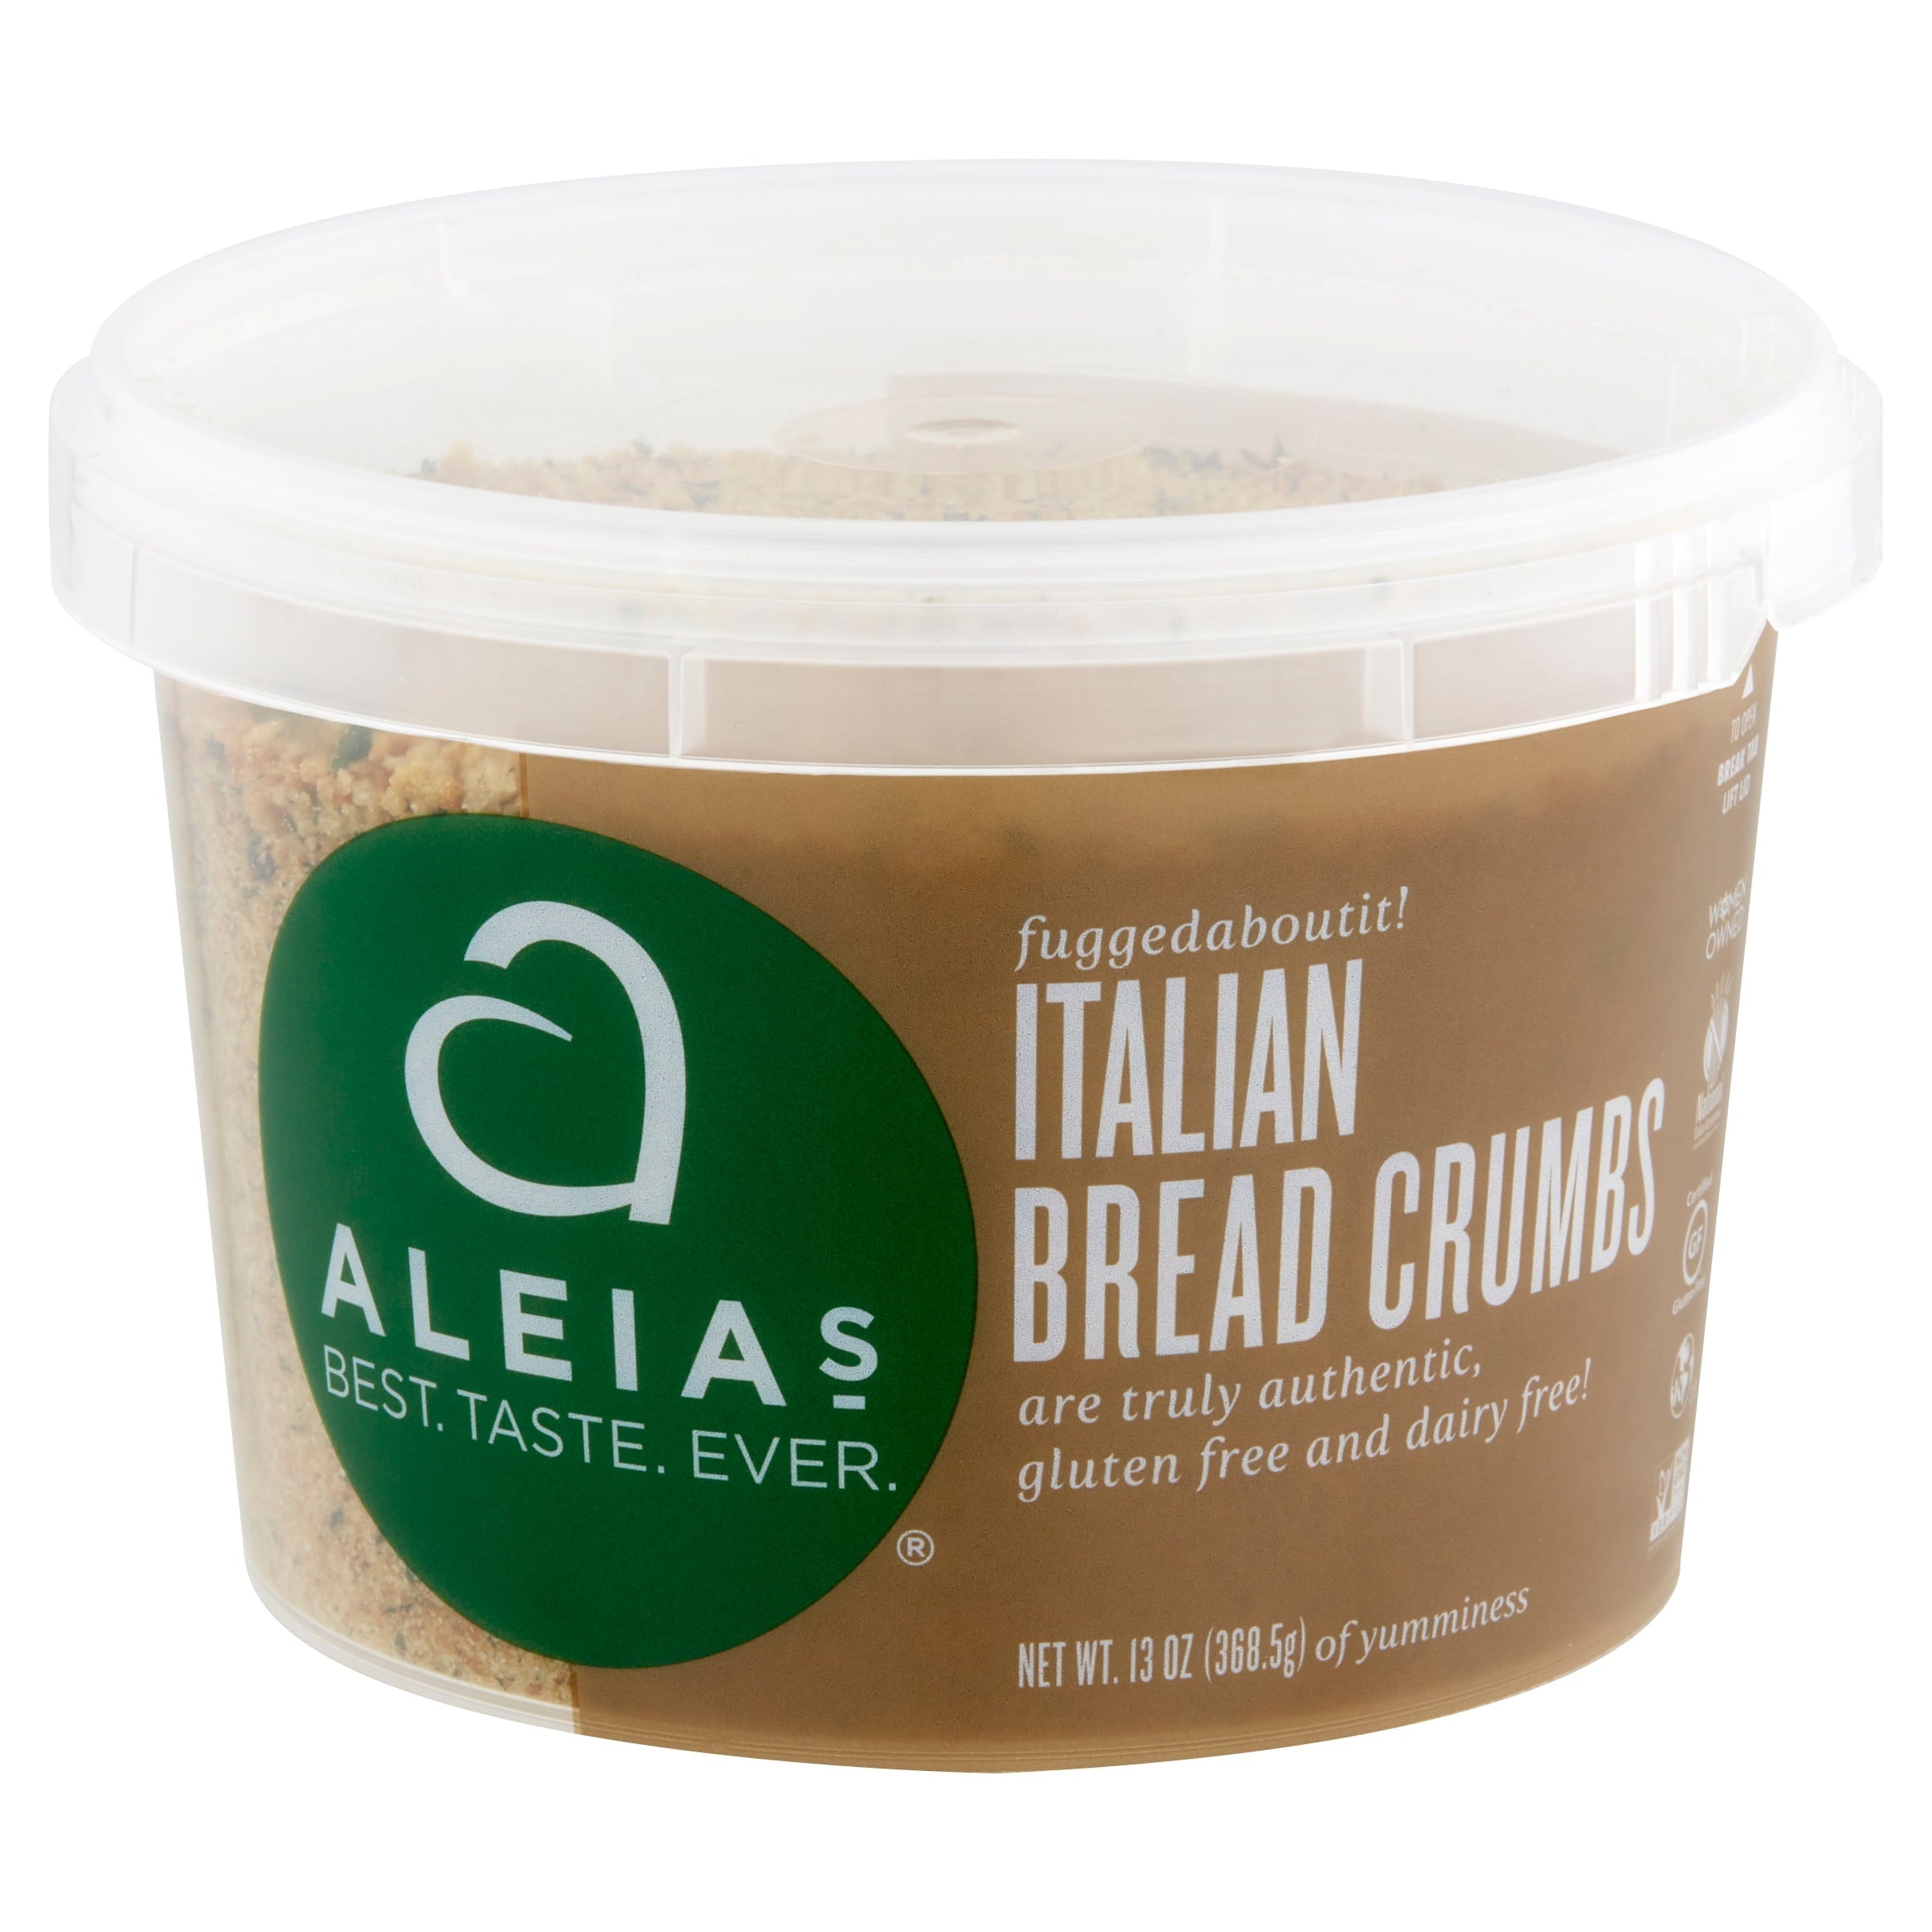 Aleias: Italian Bread Crumb Gluten Free, 13 oz Tub